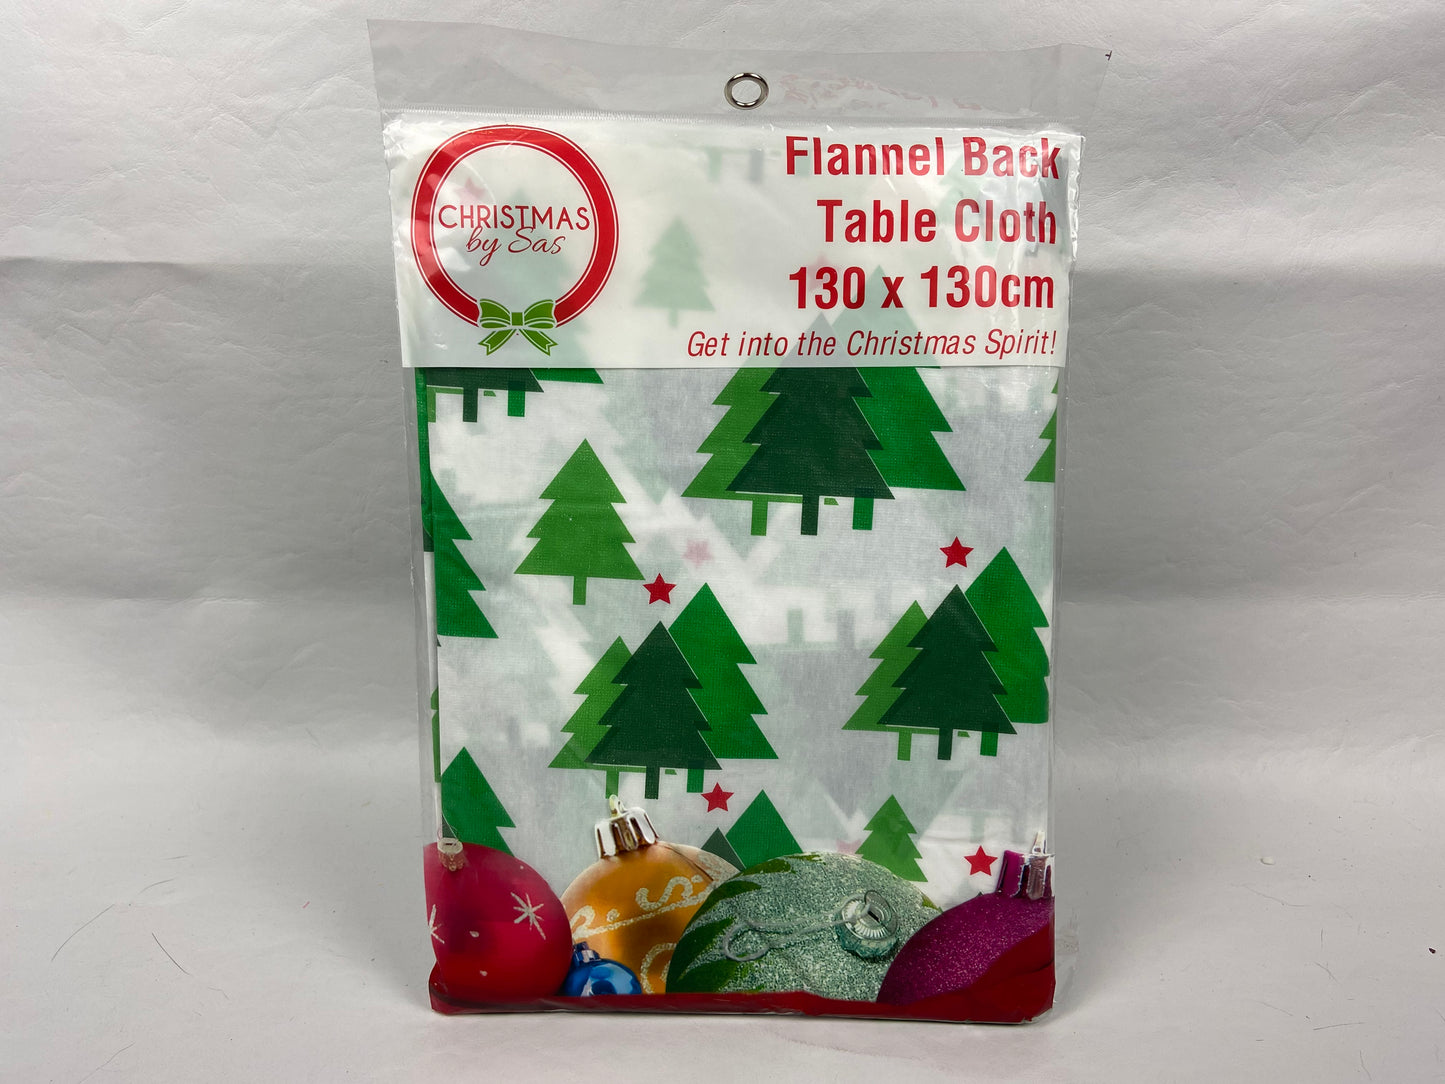 Christmas Flannel Back Table Cloth - 130cm x 130cm - Christmas Trees